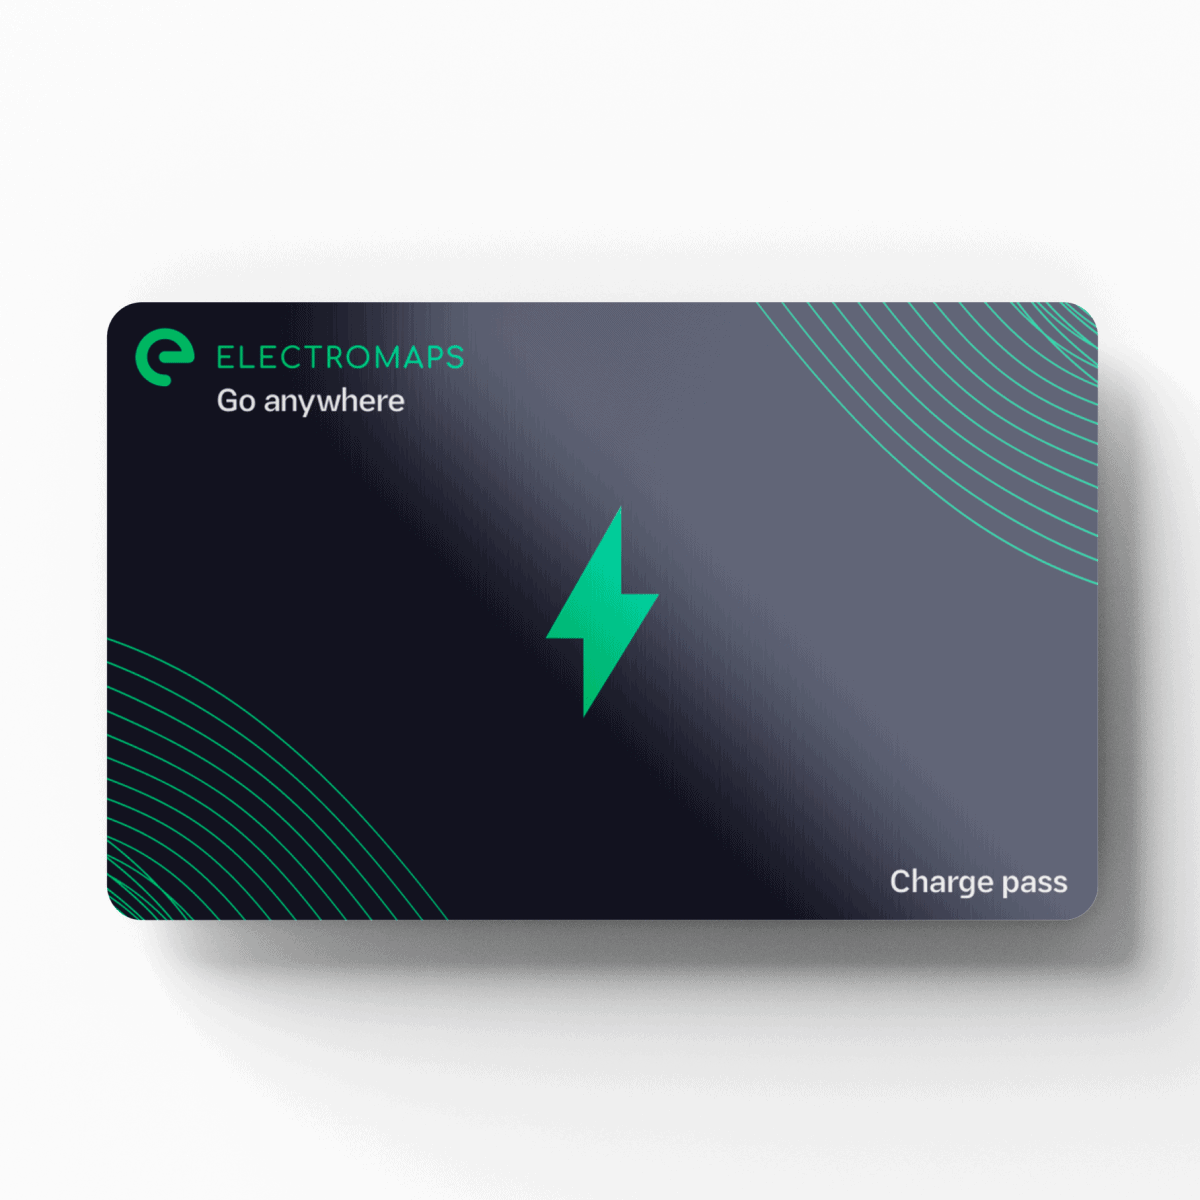 Electropass card